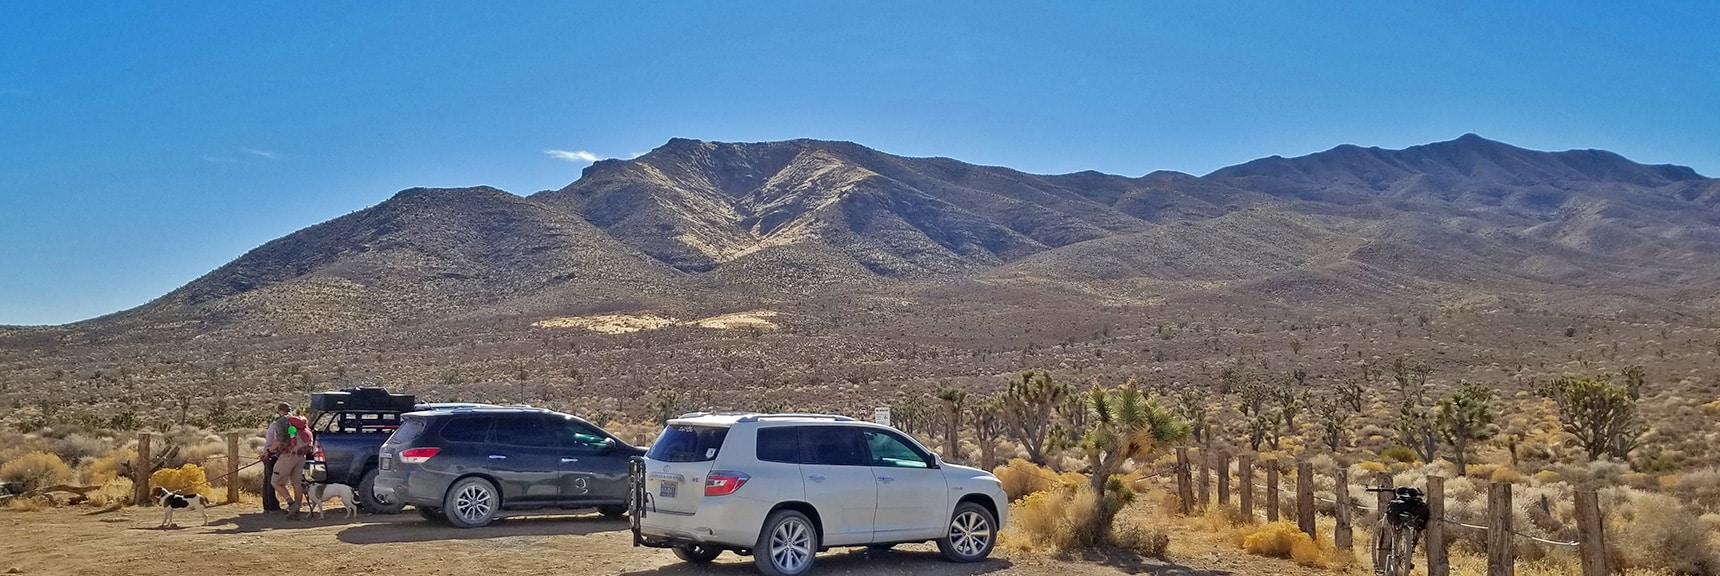 Gass Peak Trailhead on Gass Peak Road | Gass Peak Road Circuit | Desert National Wildlife Refuge | Nevada